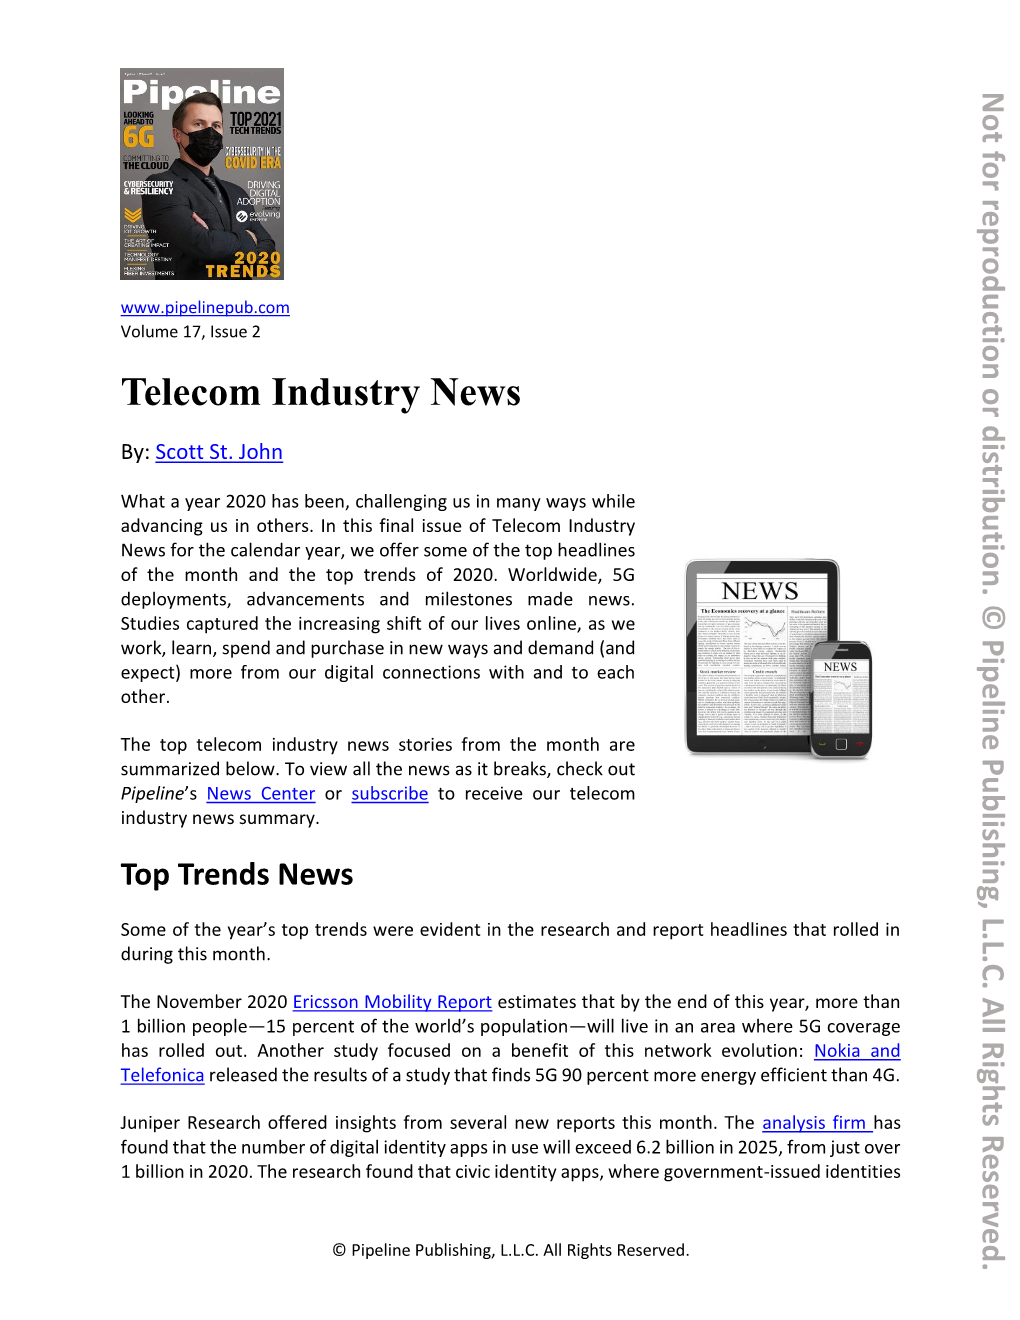 Telecom Industry News